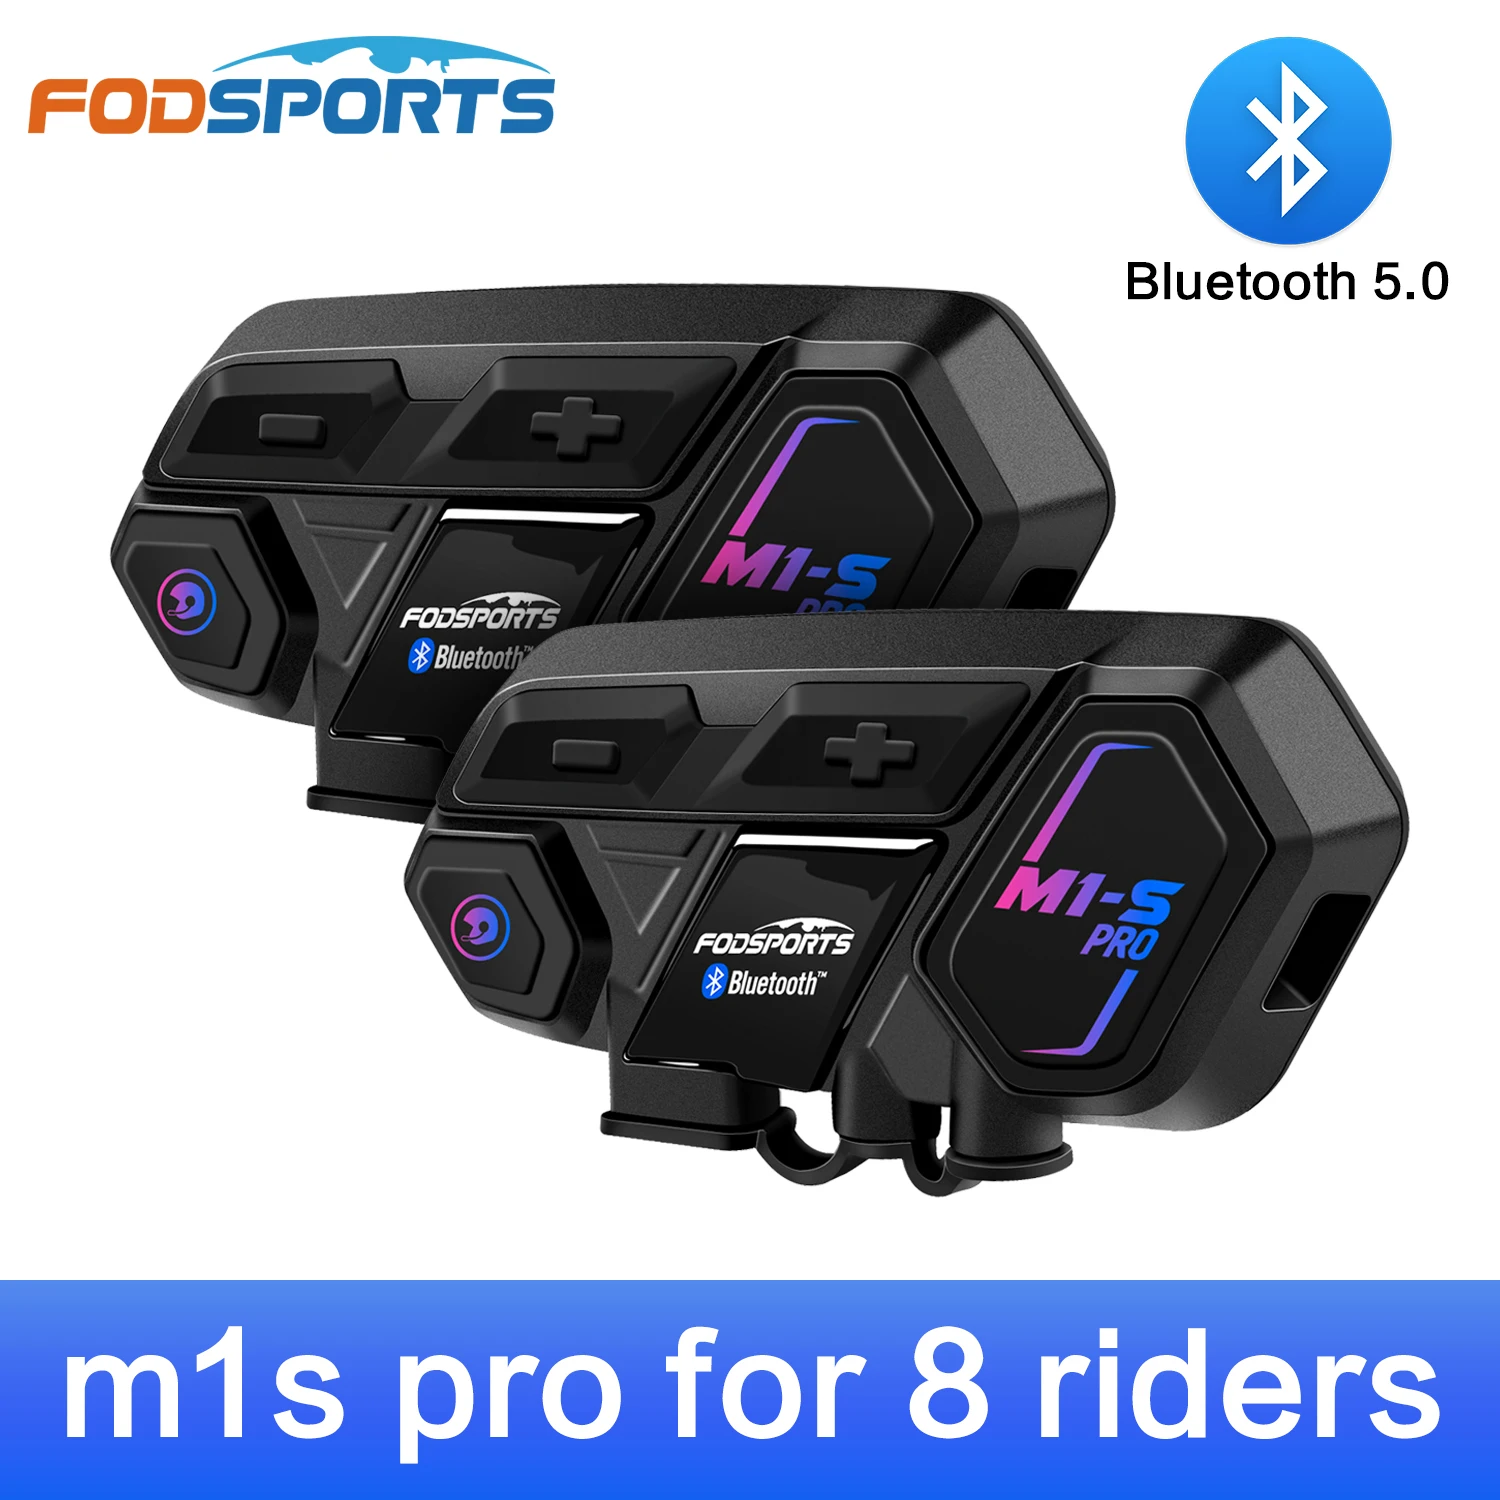 2pcs Fodsports M1-S Pro Motorcycle Helmet Intercom 8 Rider Wireless Bluetooth Headset Intercomunicador Moto Interphone BT5.0